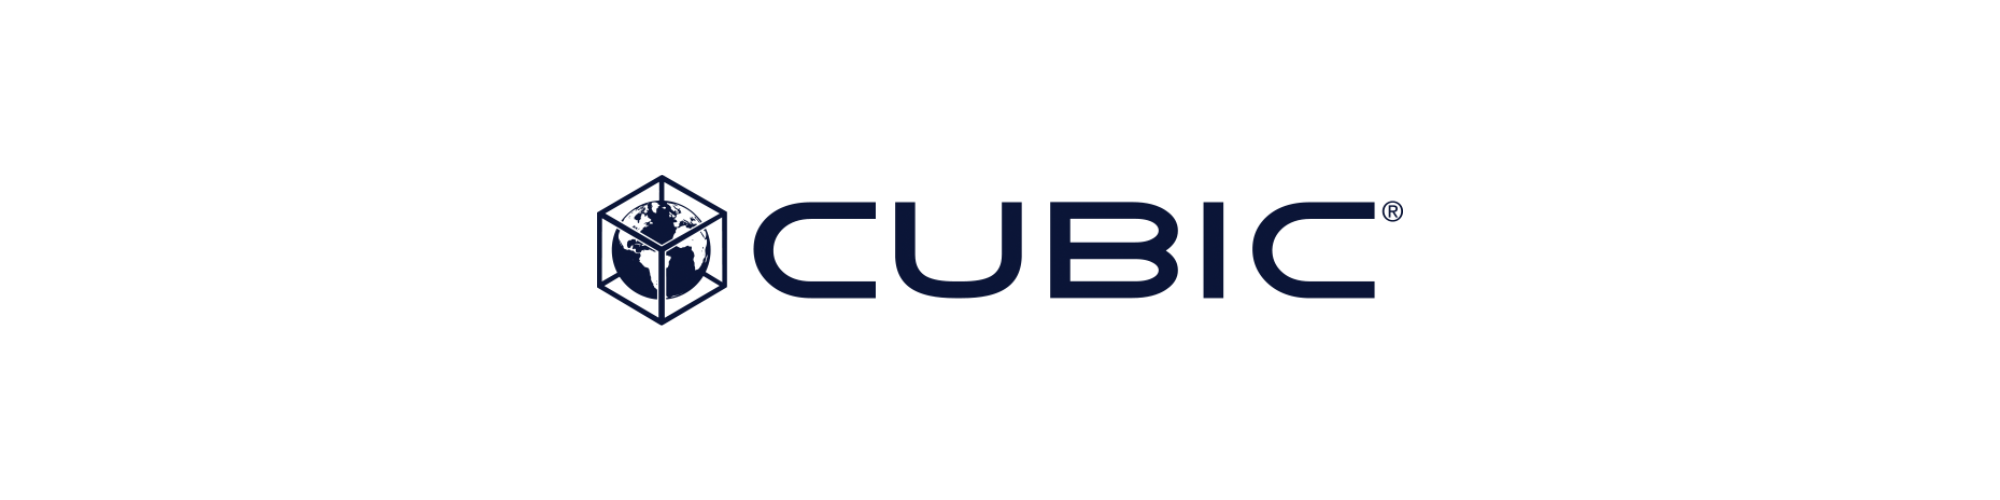 1015 Cubic Corporation logo